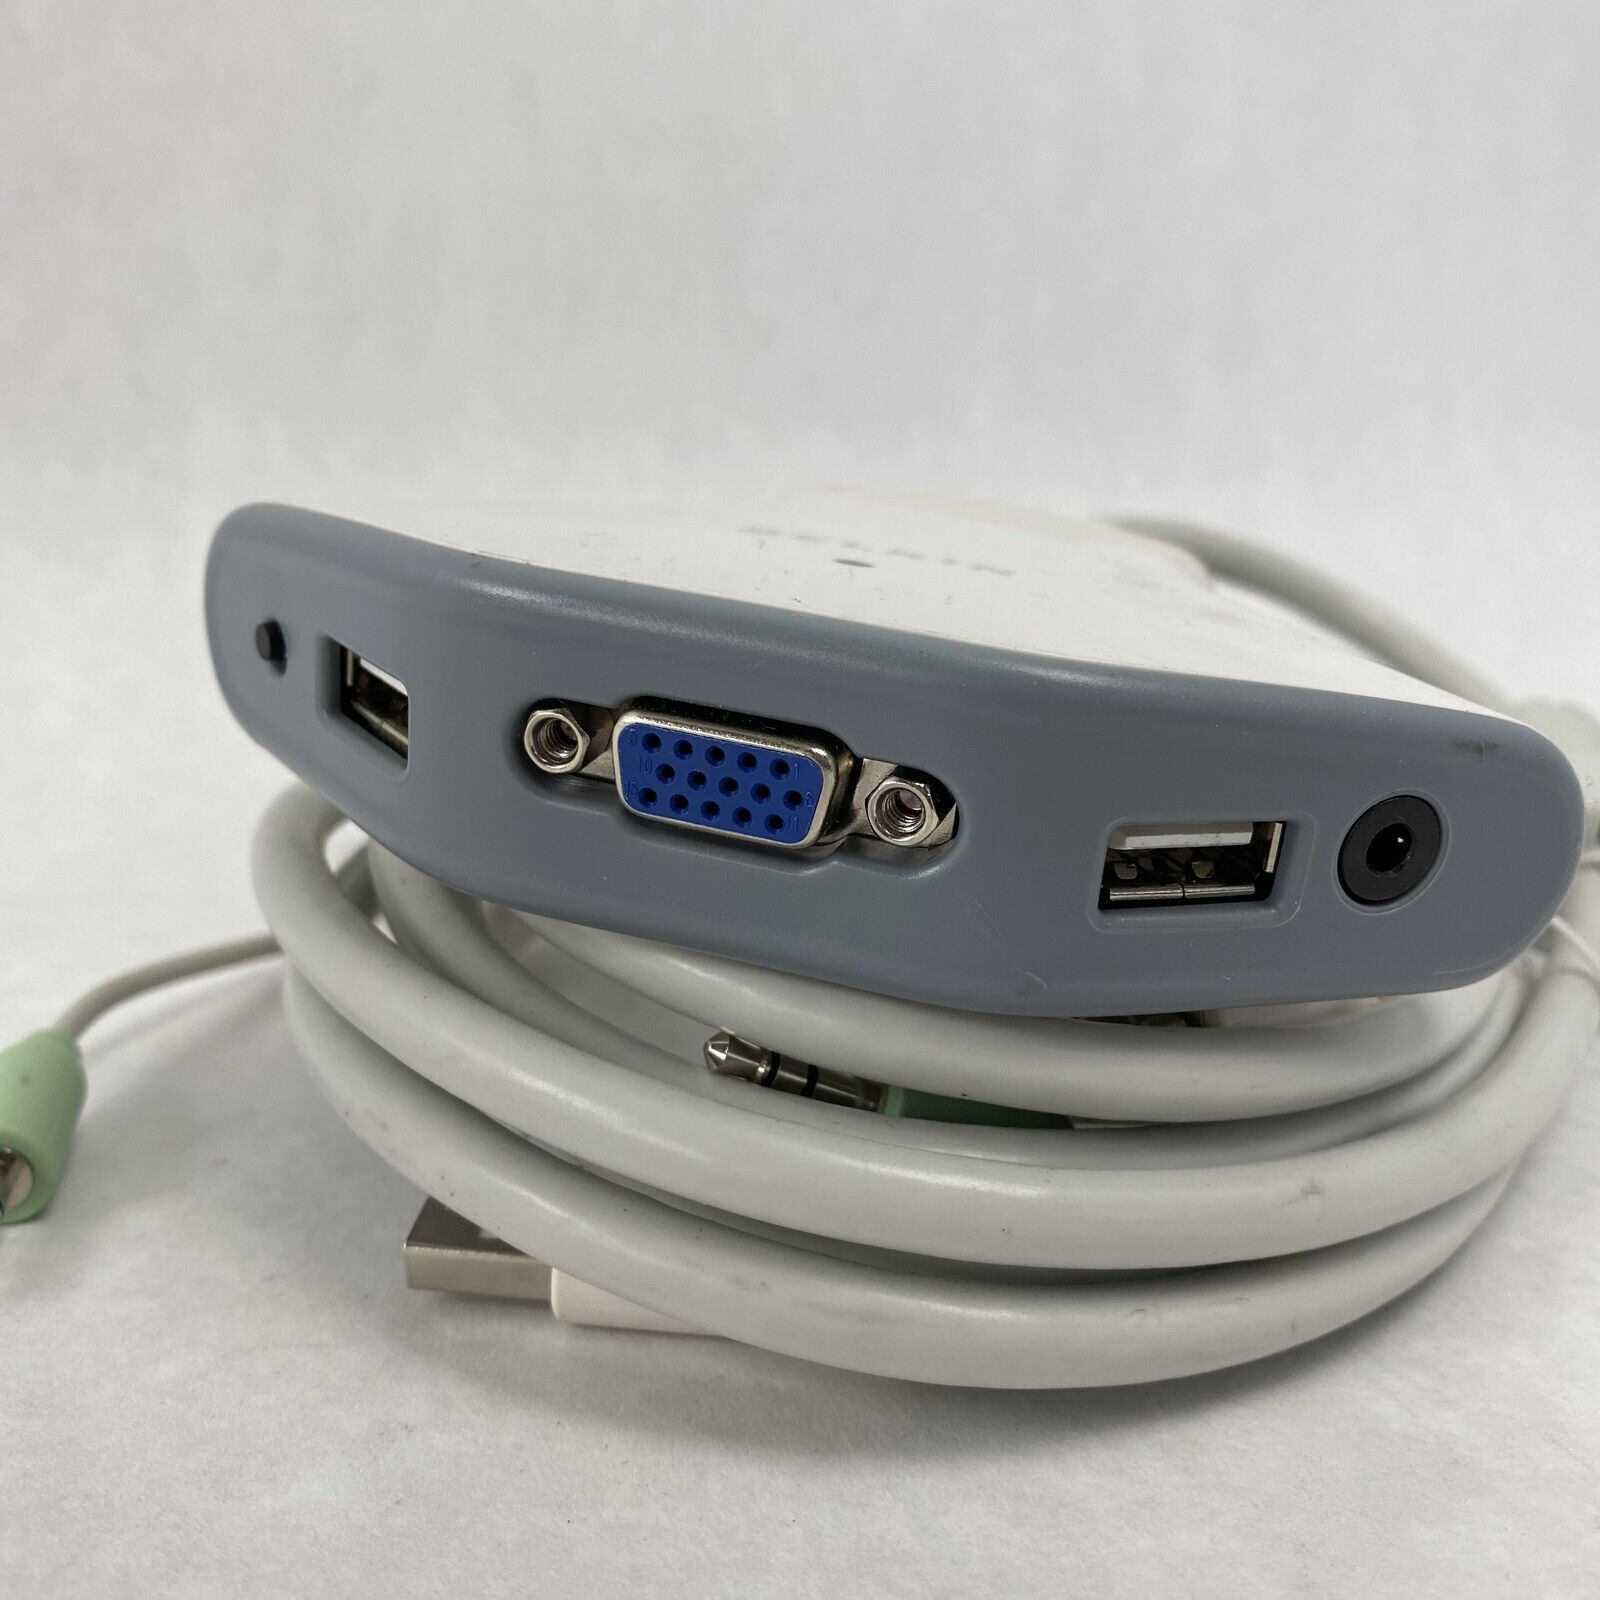 Belkin F1DL102U2 2-Ports External USB VGA KVM Switch with Audio